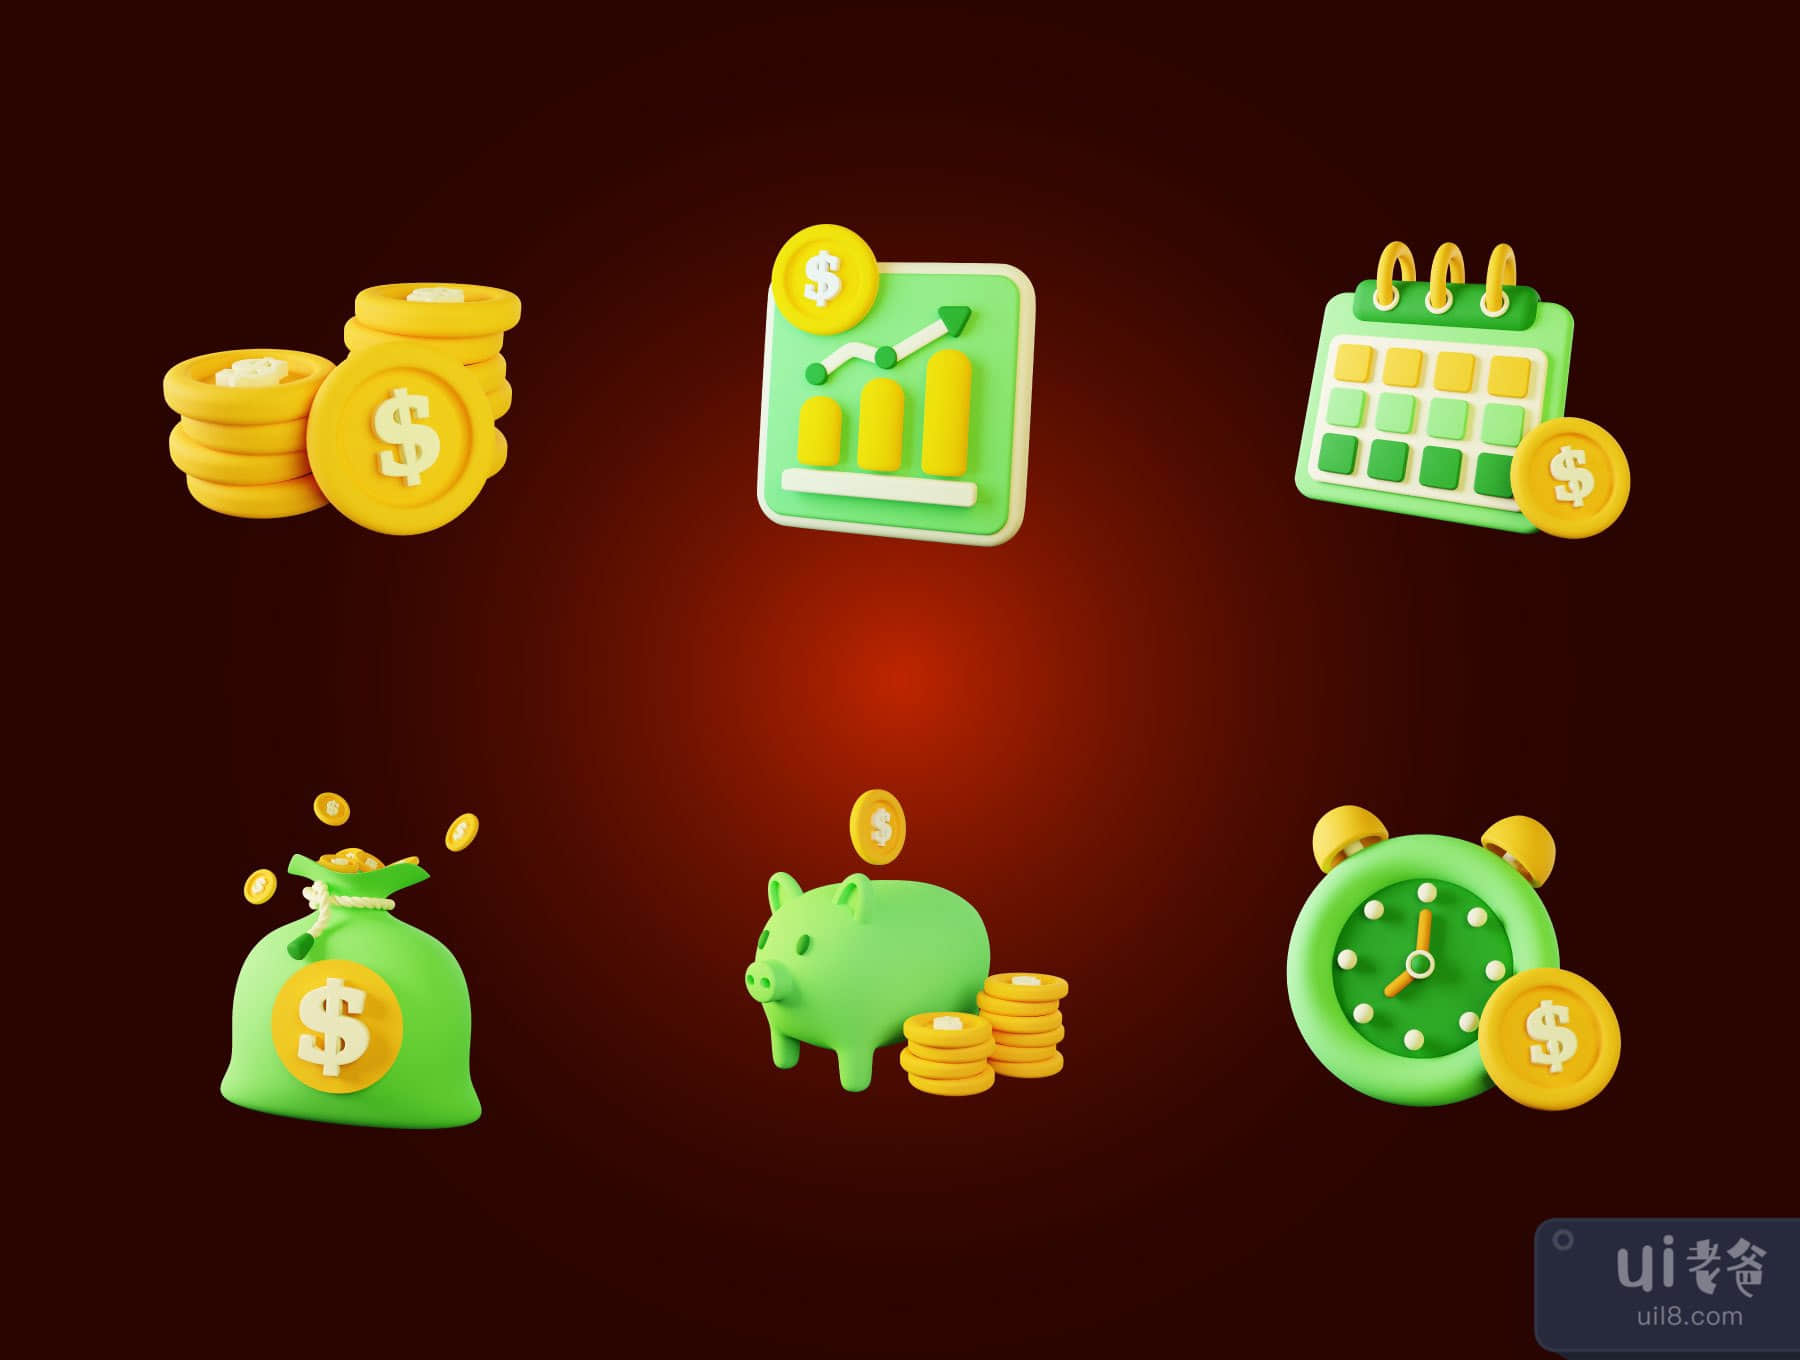 金融 - 3D图标包 (Finance - 3D Icon Pack)插图4